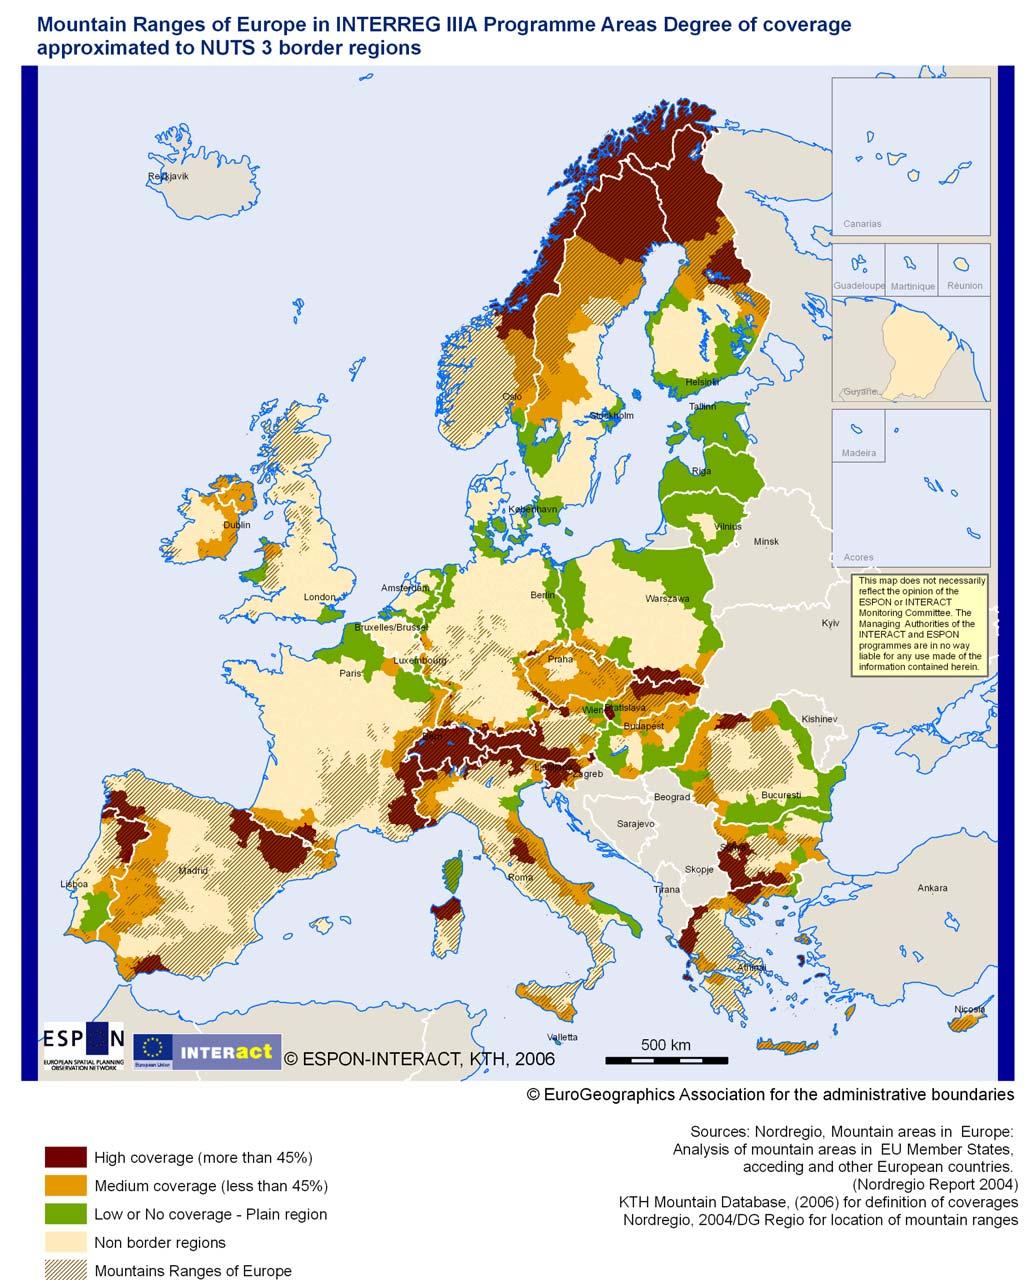 3 Additional Maps Map 1 Mountain Ranges of Europe in INTERREG IIIA